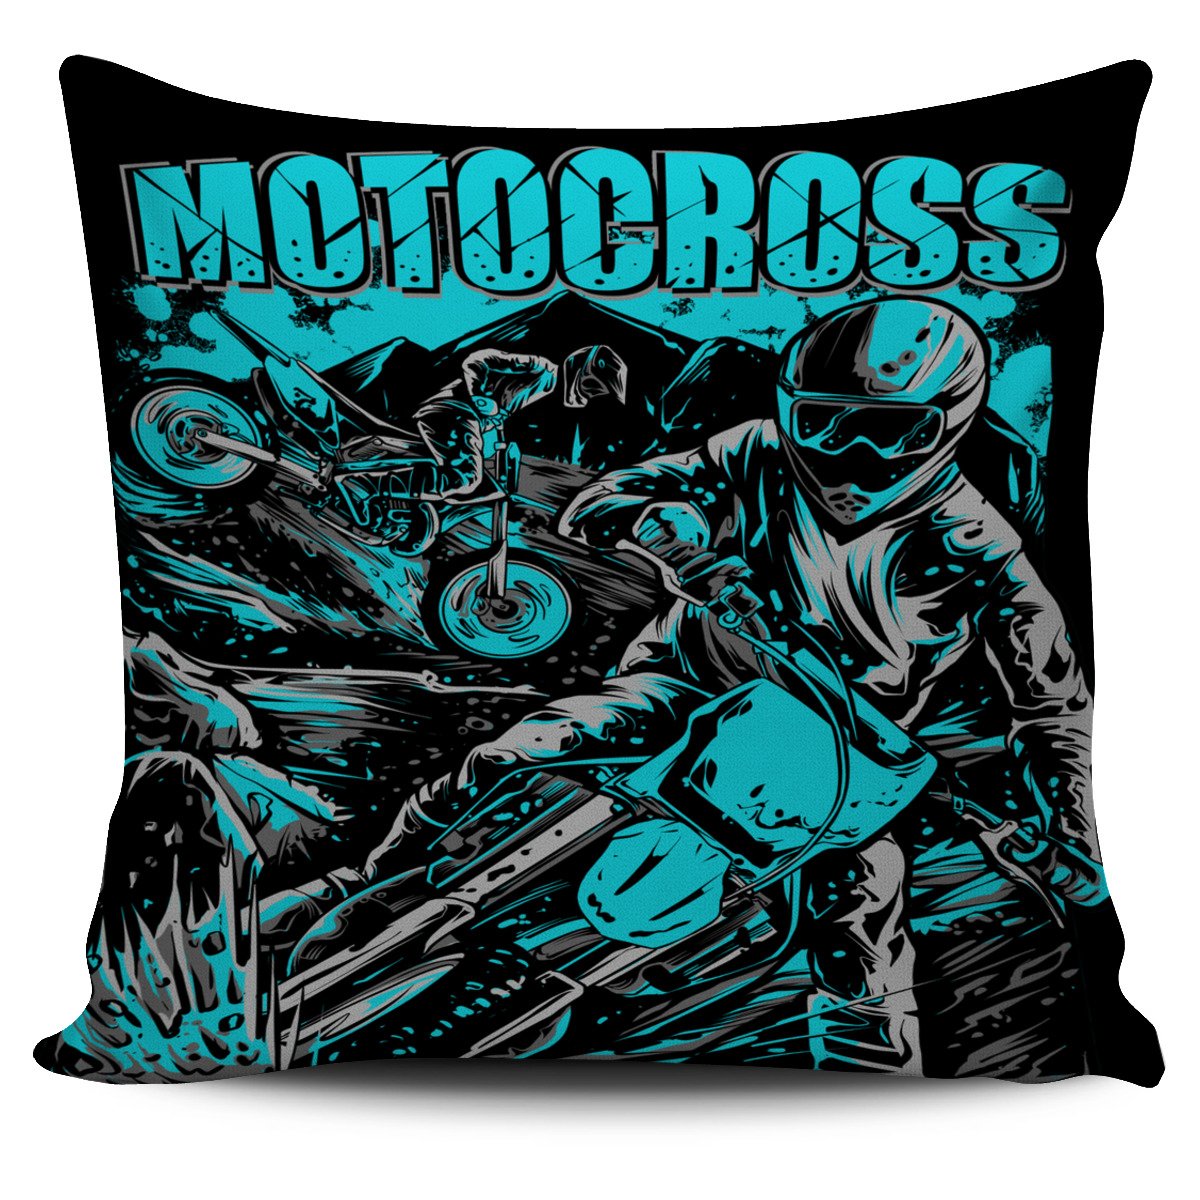 Motocross Pillow Covers